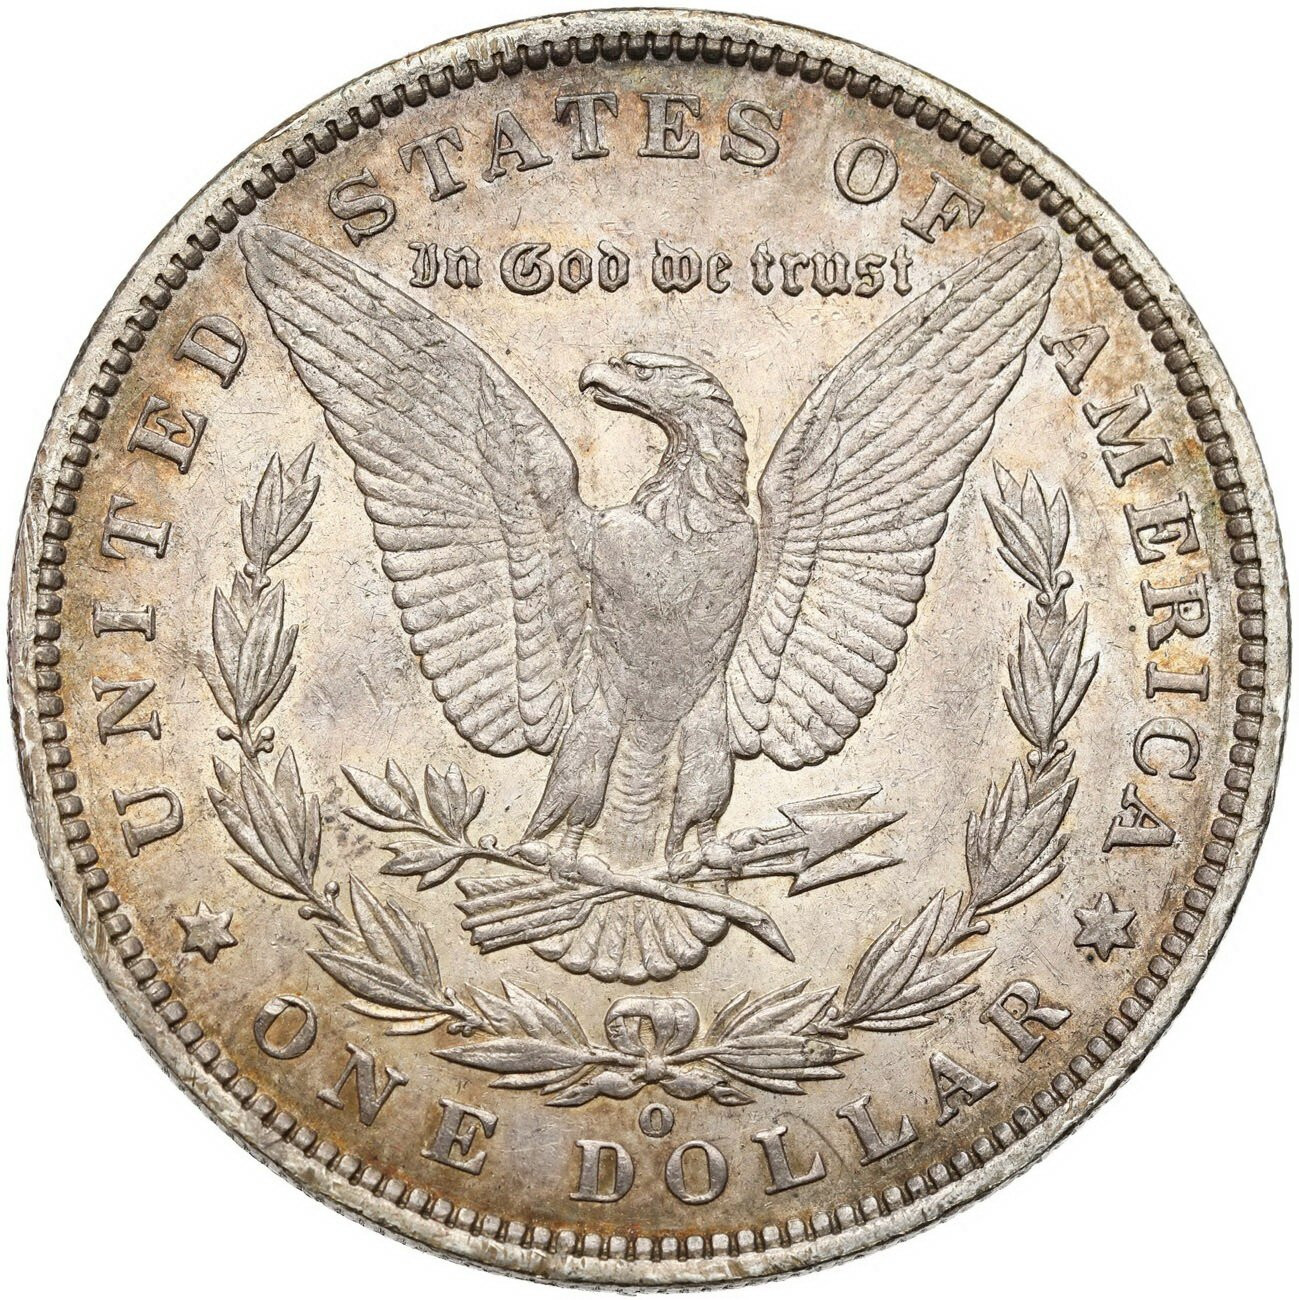 USA 1 dolar 1890 O, New Orleans 